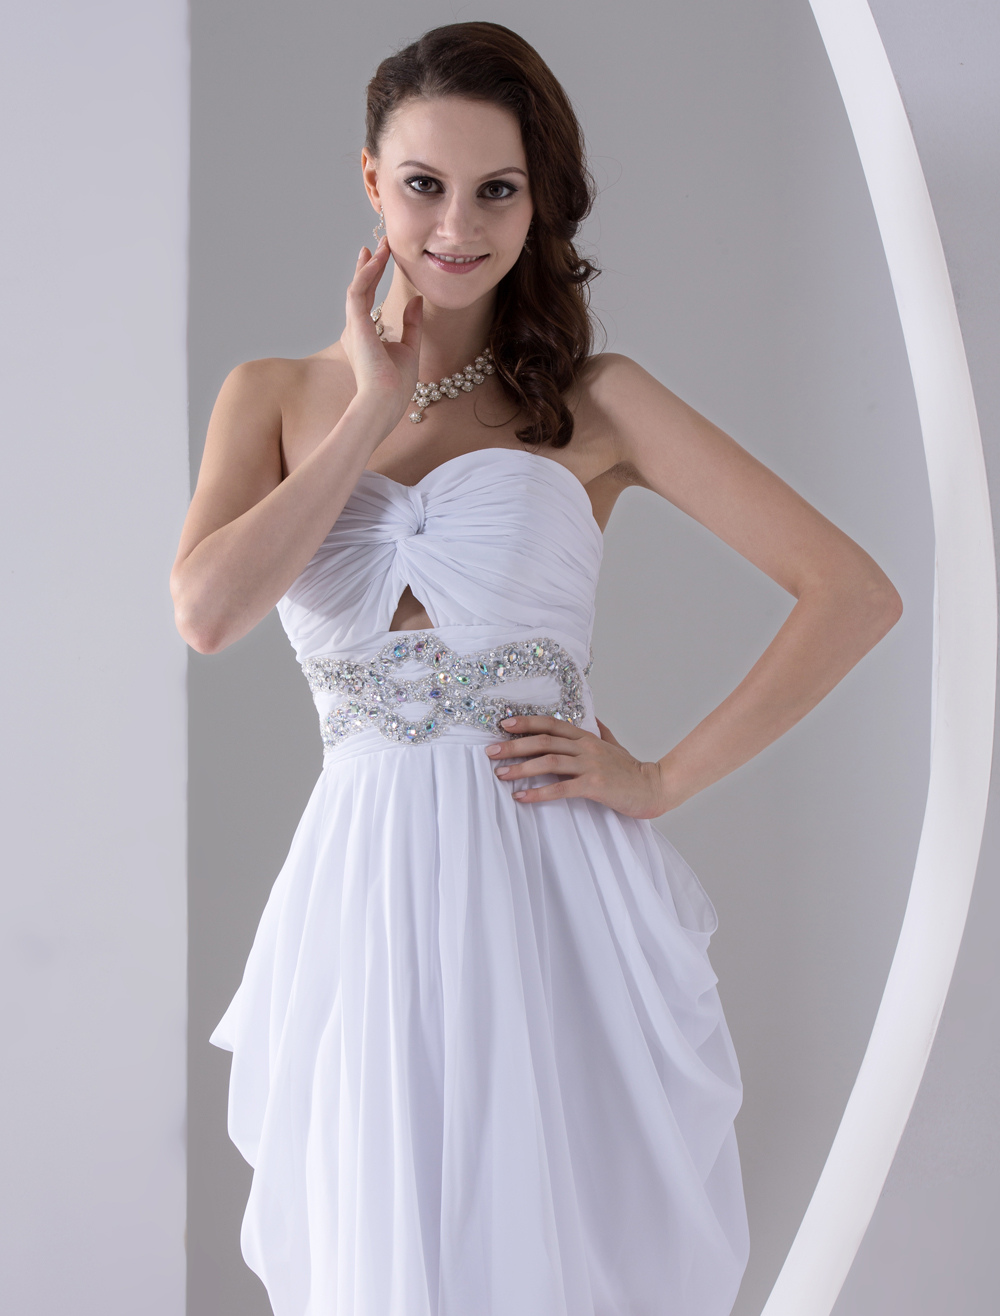 White Prom Dress Rhinestone Strapless Backless Dress - Milanoo.com